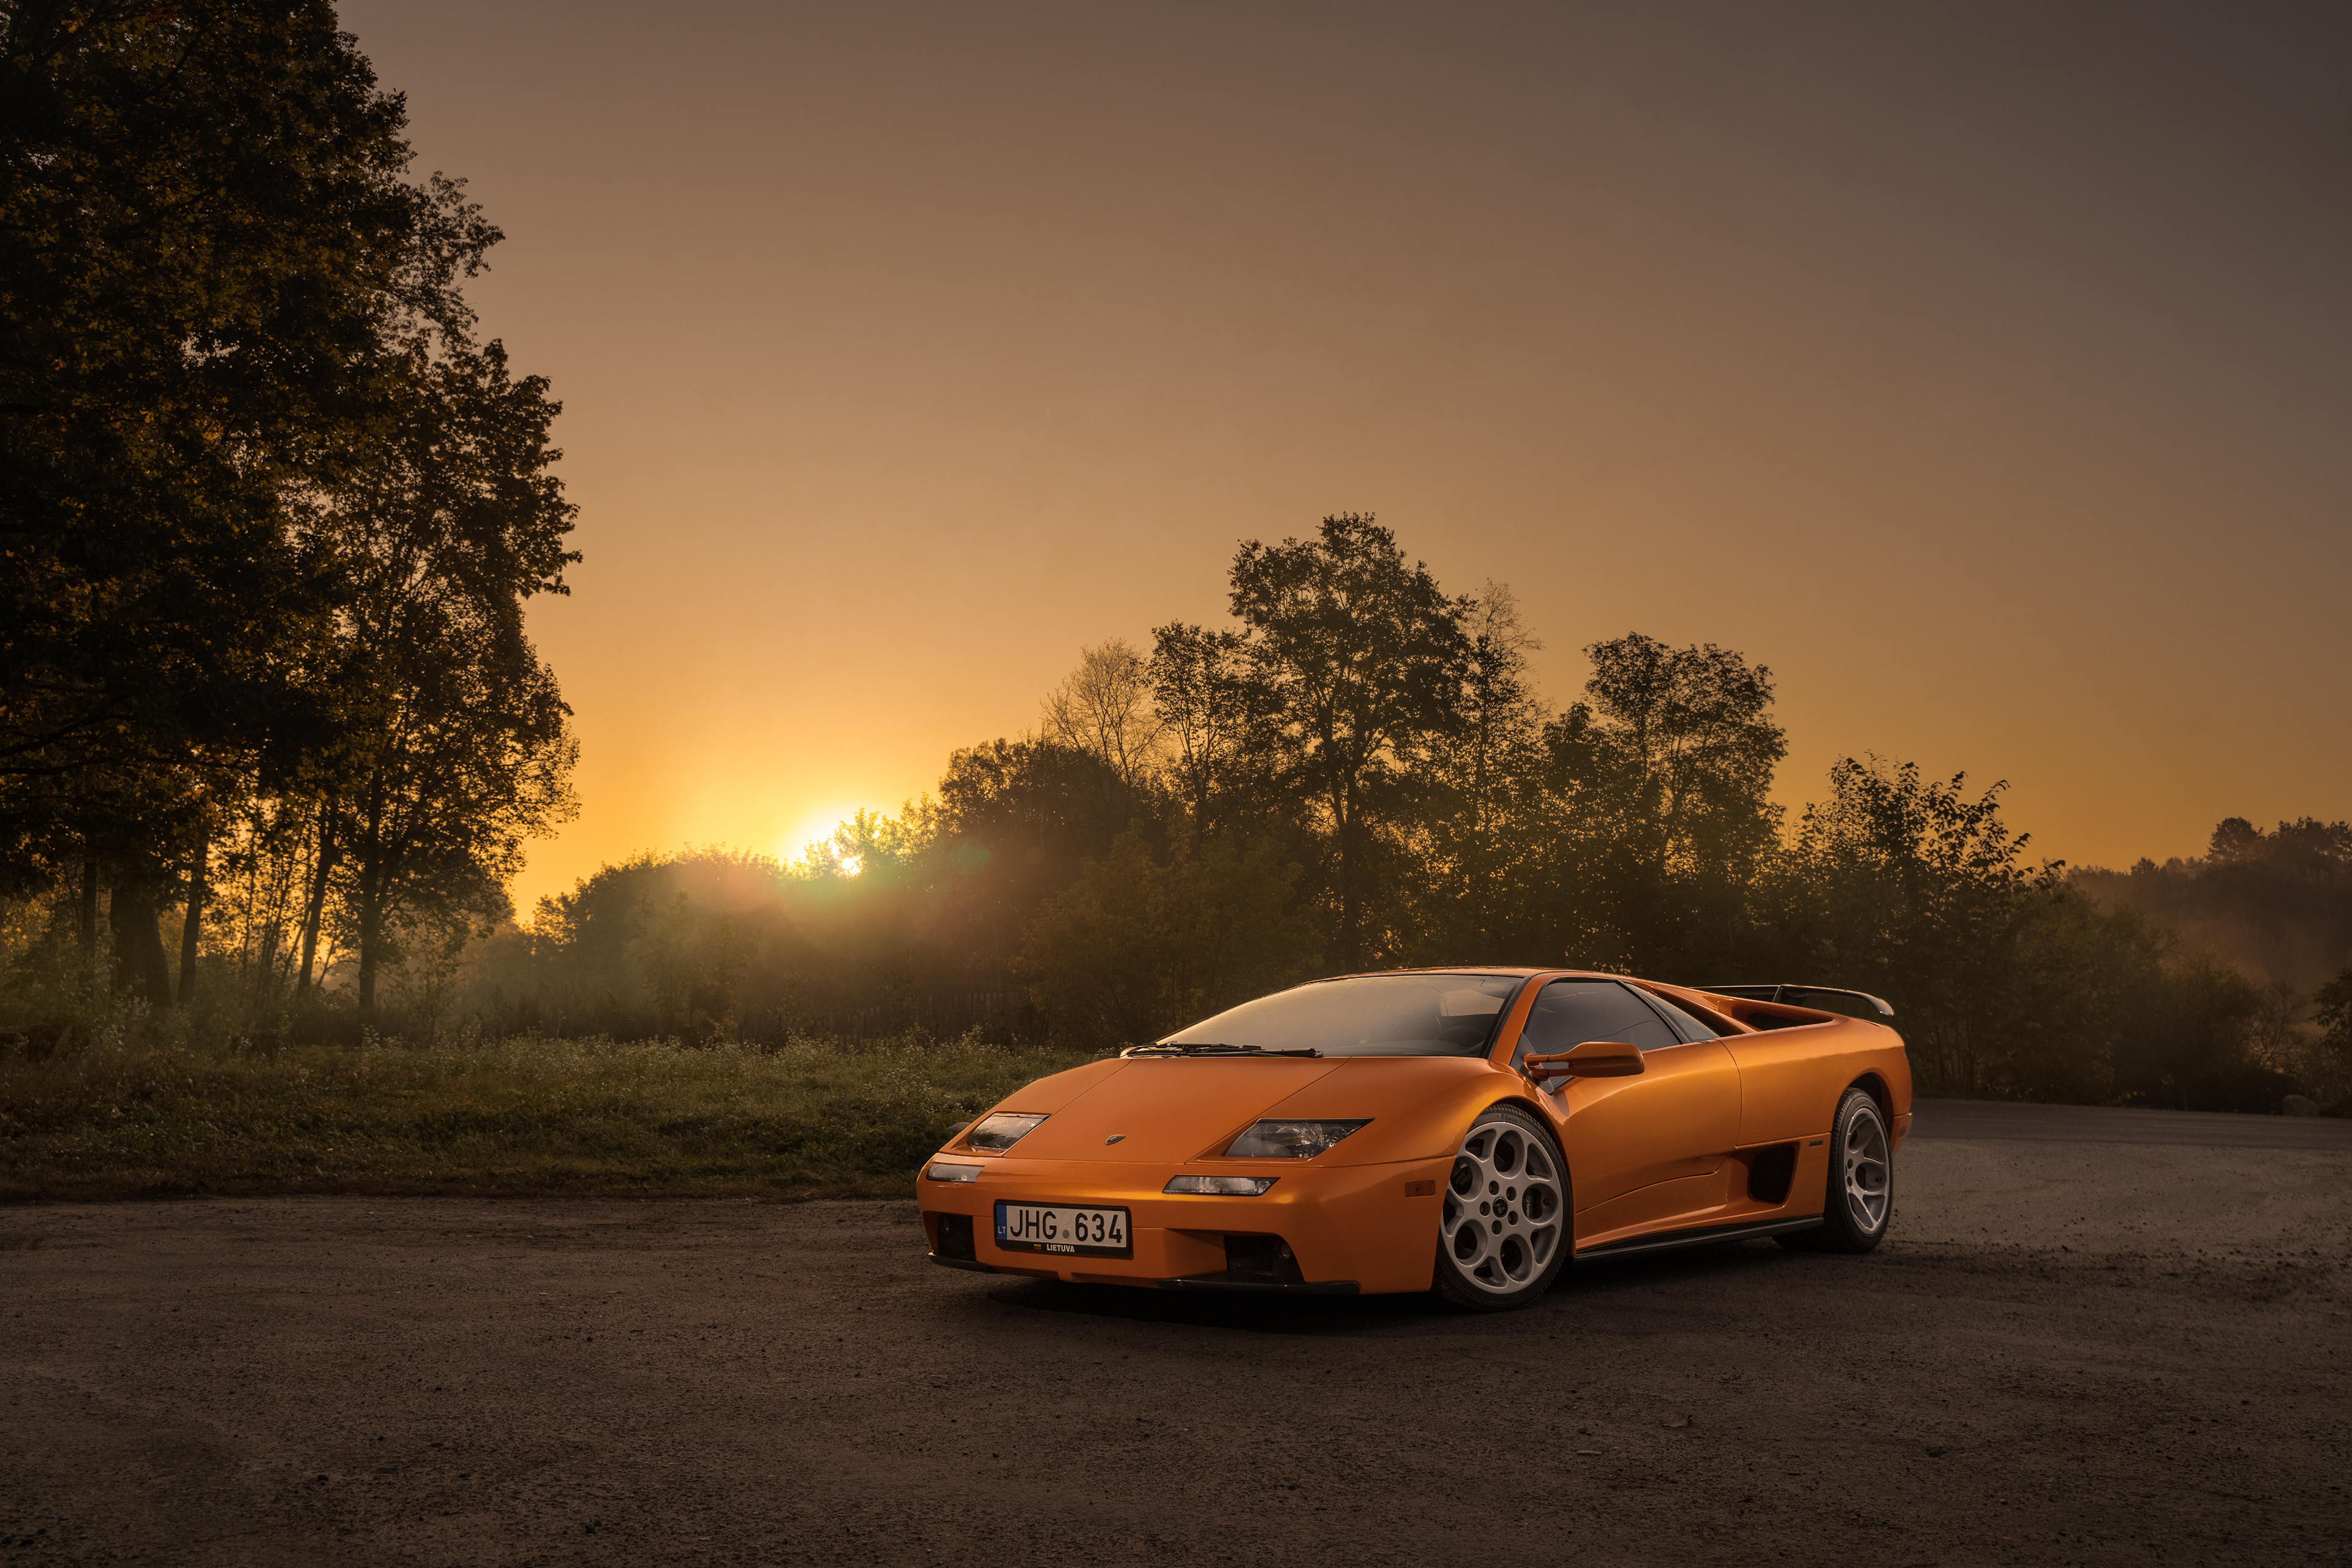 Lamborghini Diablo VT 2019 4k, HD Cars, 4k Wallpapers, Images ...
